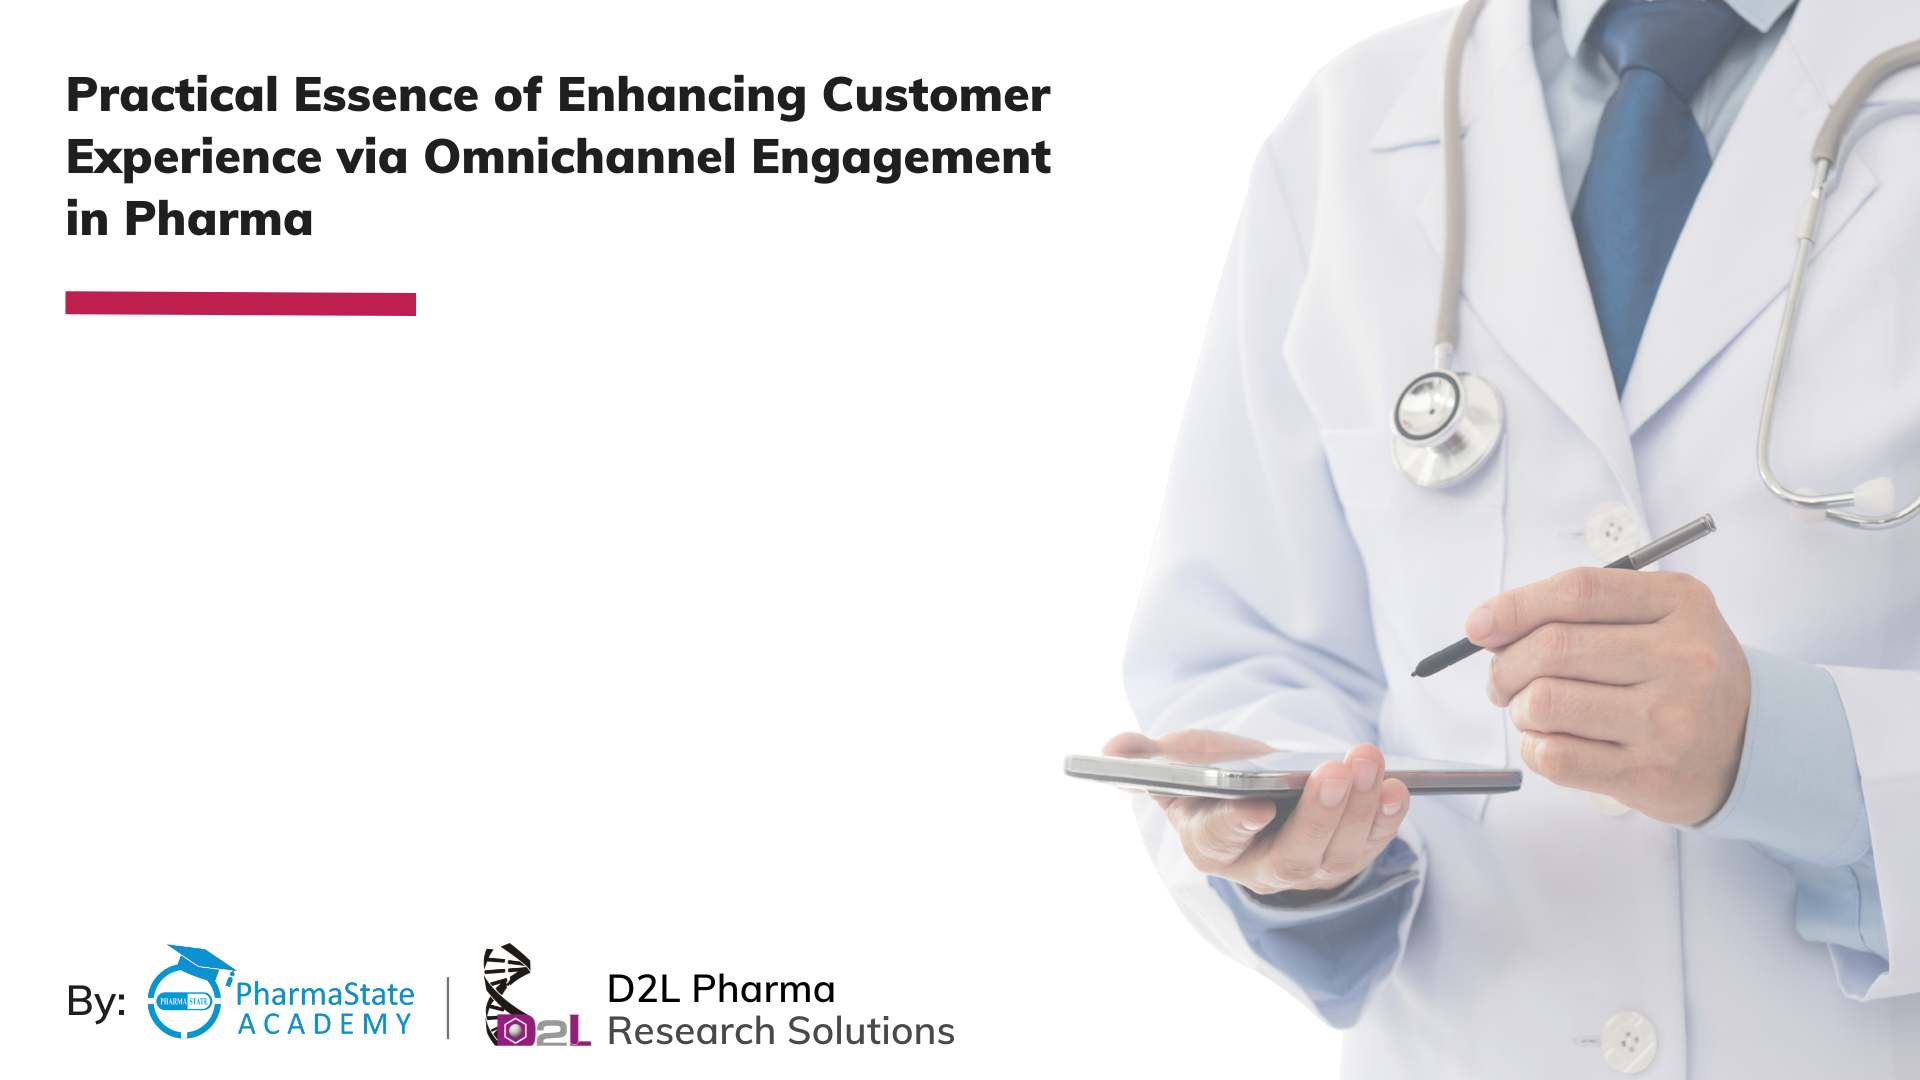 Practical Essence of Enhancing Customer Experience via Omnichannel Engagement in Pharma